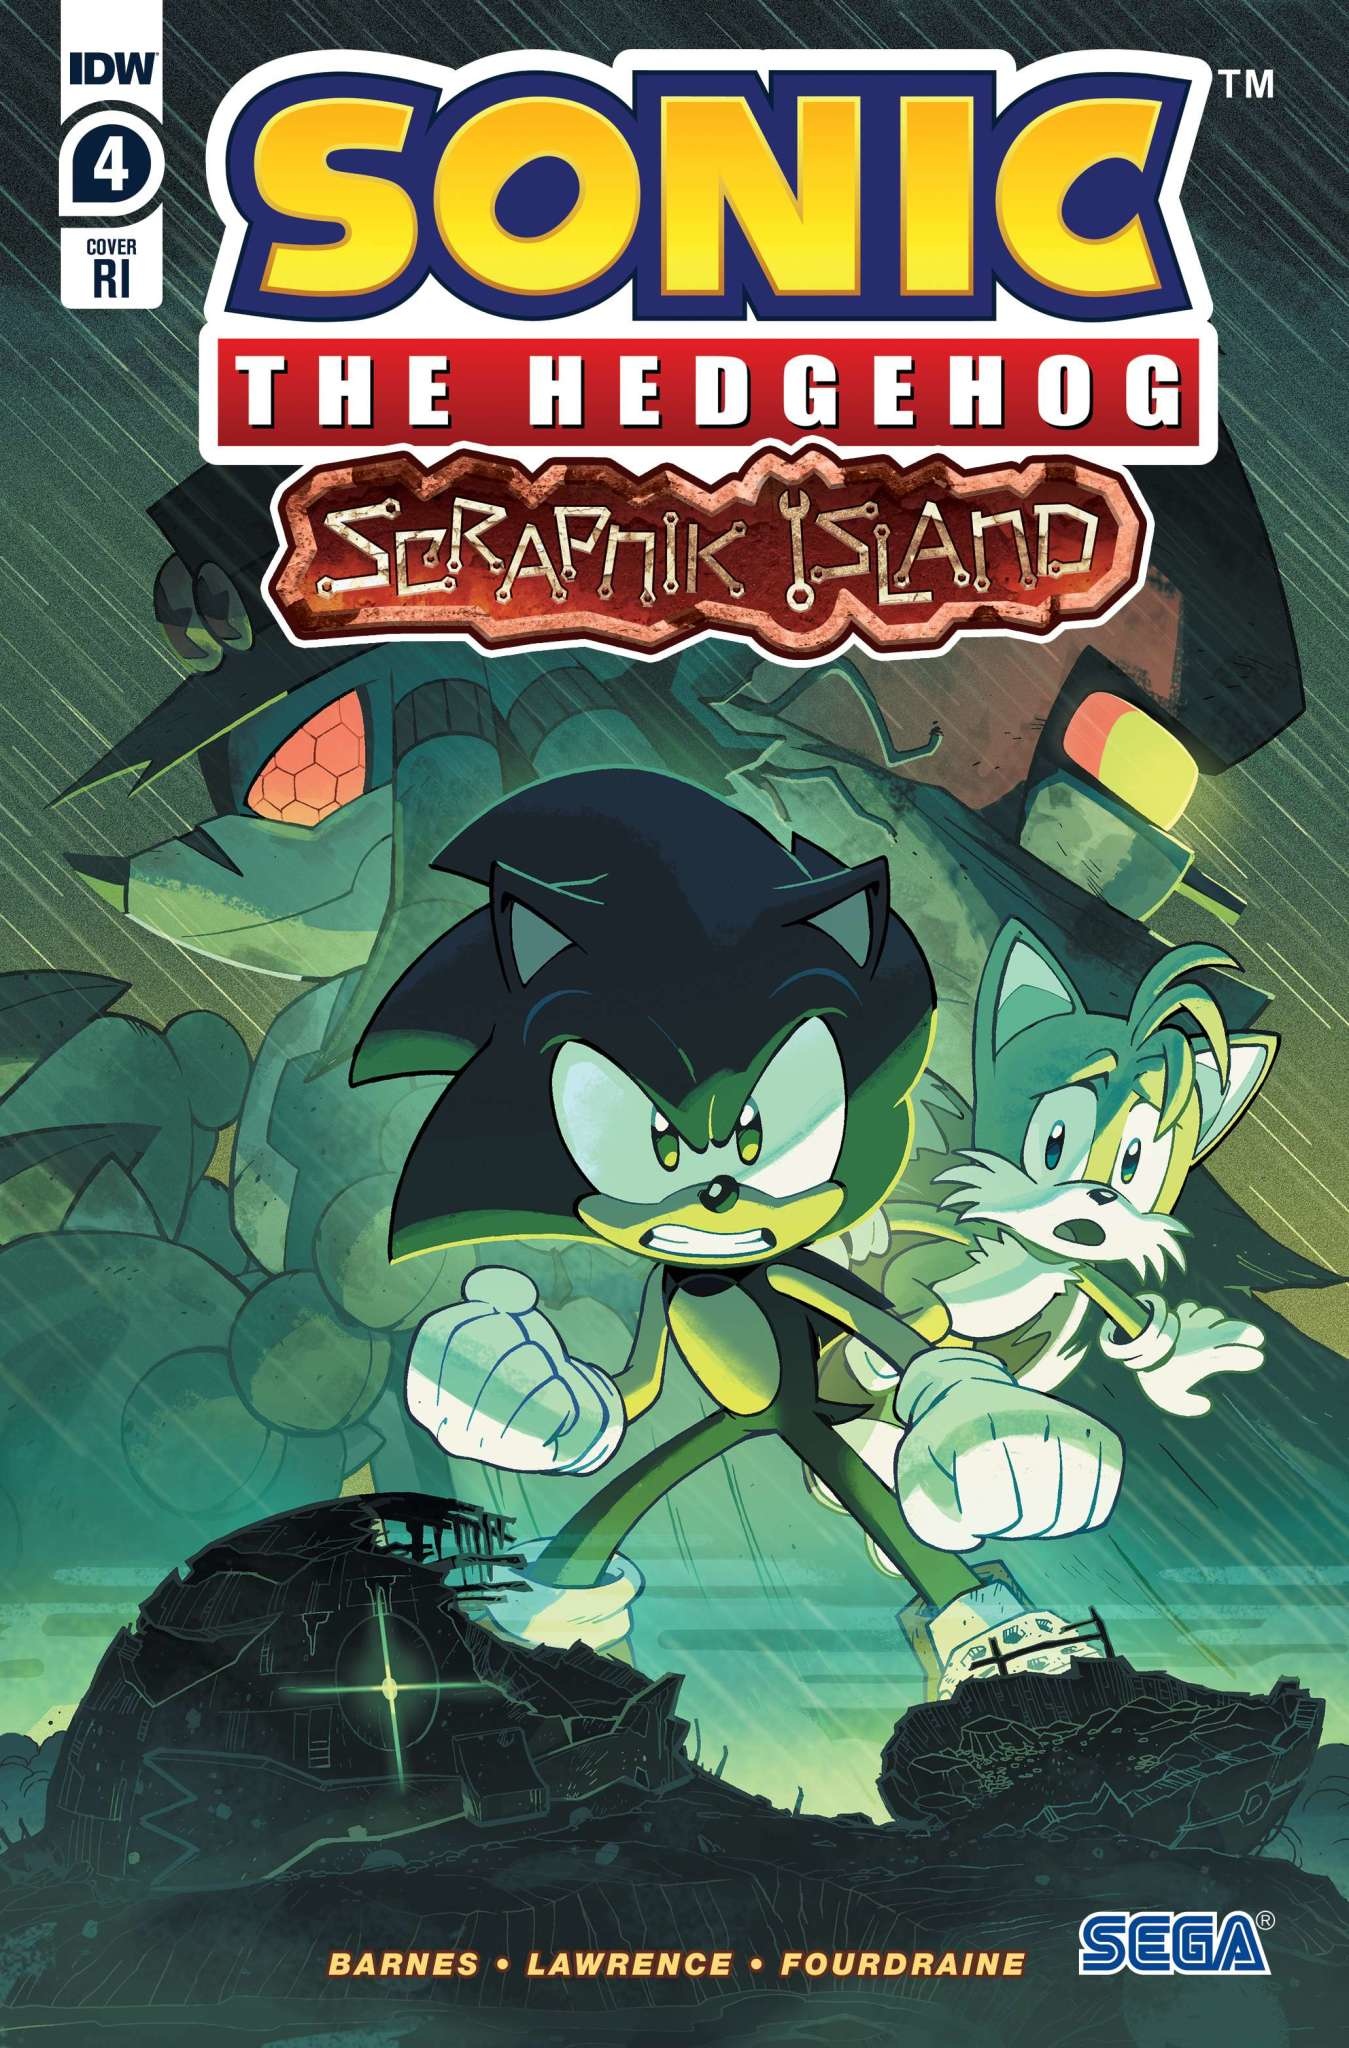 IDW Sonic The Hedgehog: Scrapnik Island #4 Variant Ri (10) (Lawrence) [1:10]